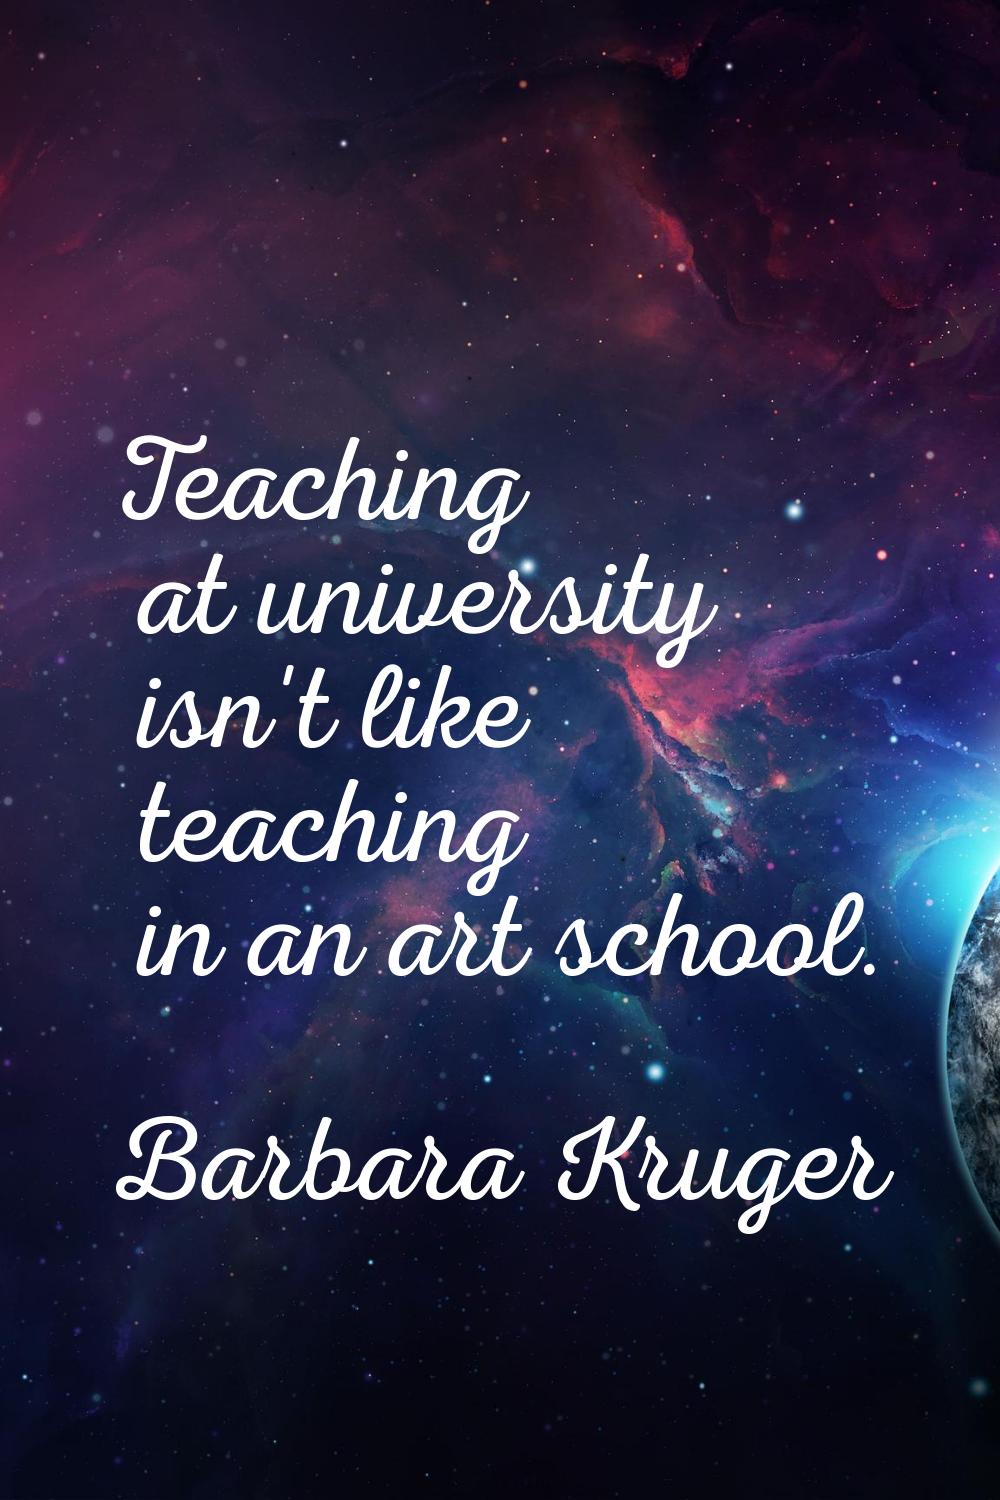 Teaching at university isn't like teaching in an art school.